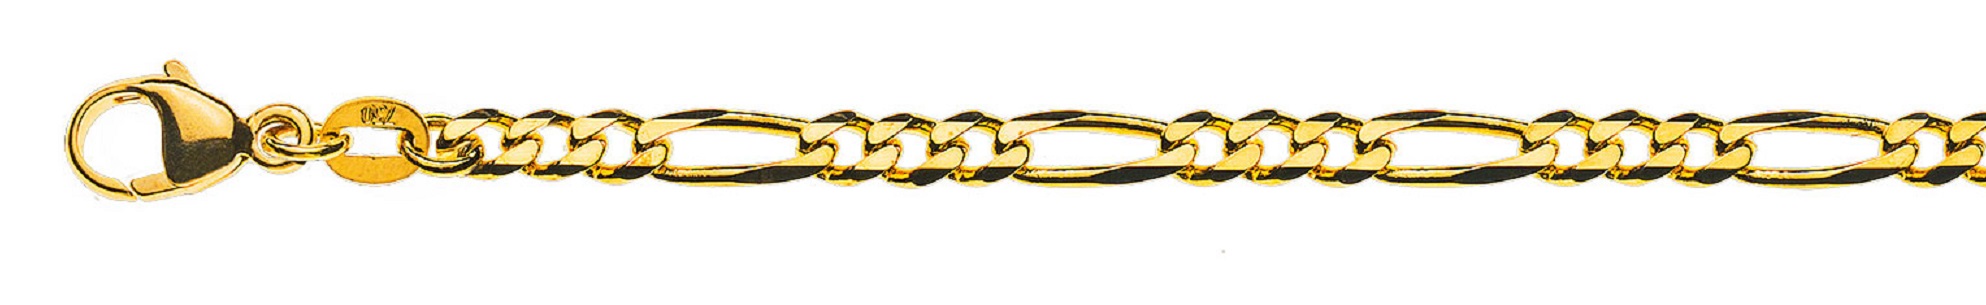 AURONOS Prestige Halskette Gelbgold 18K Figarokette 50cm 3.4mm